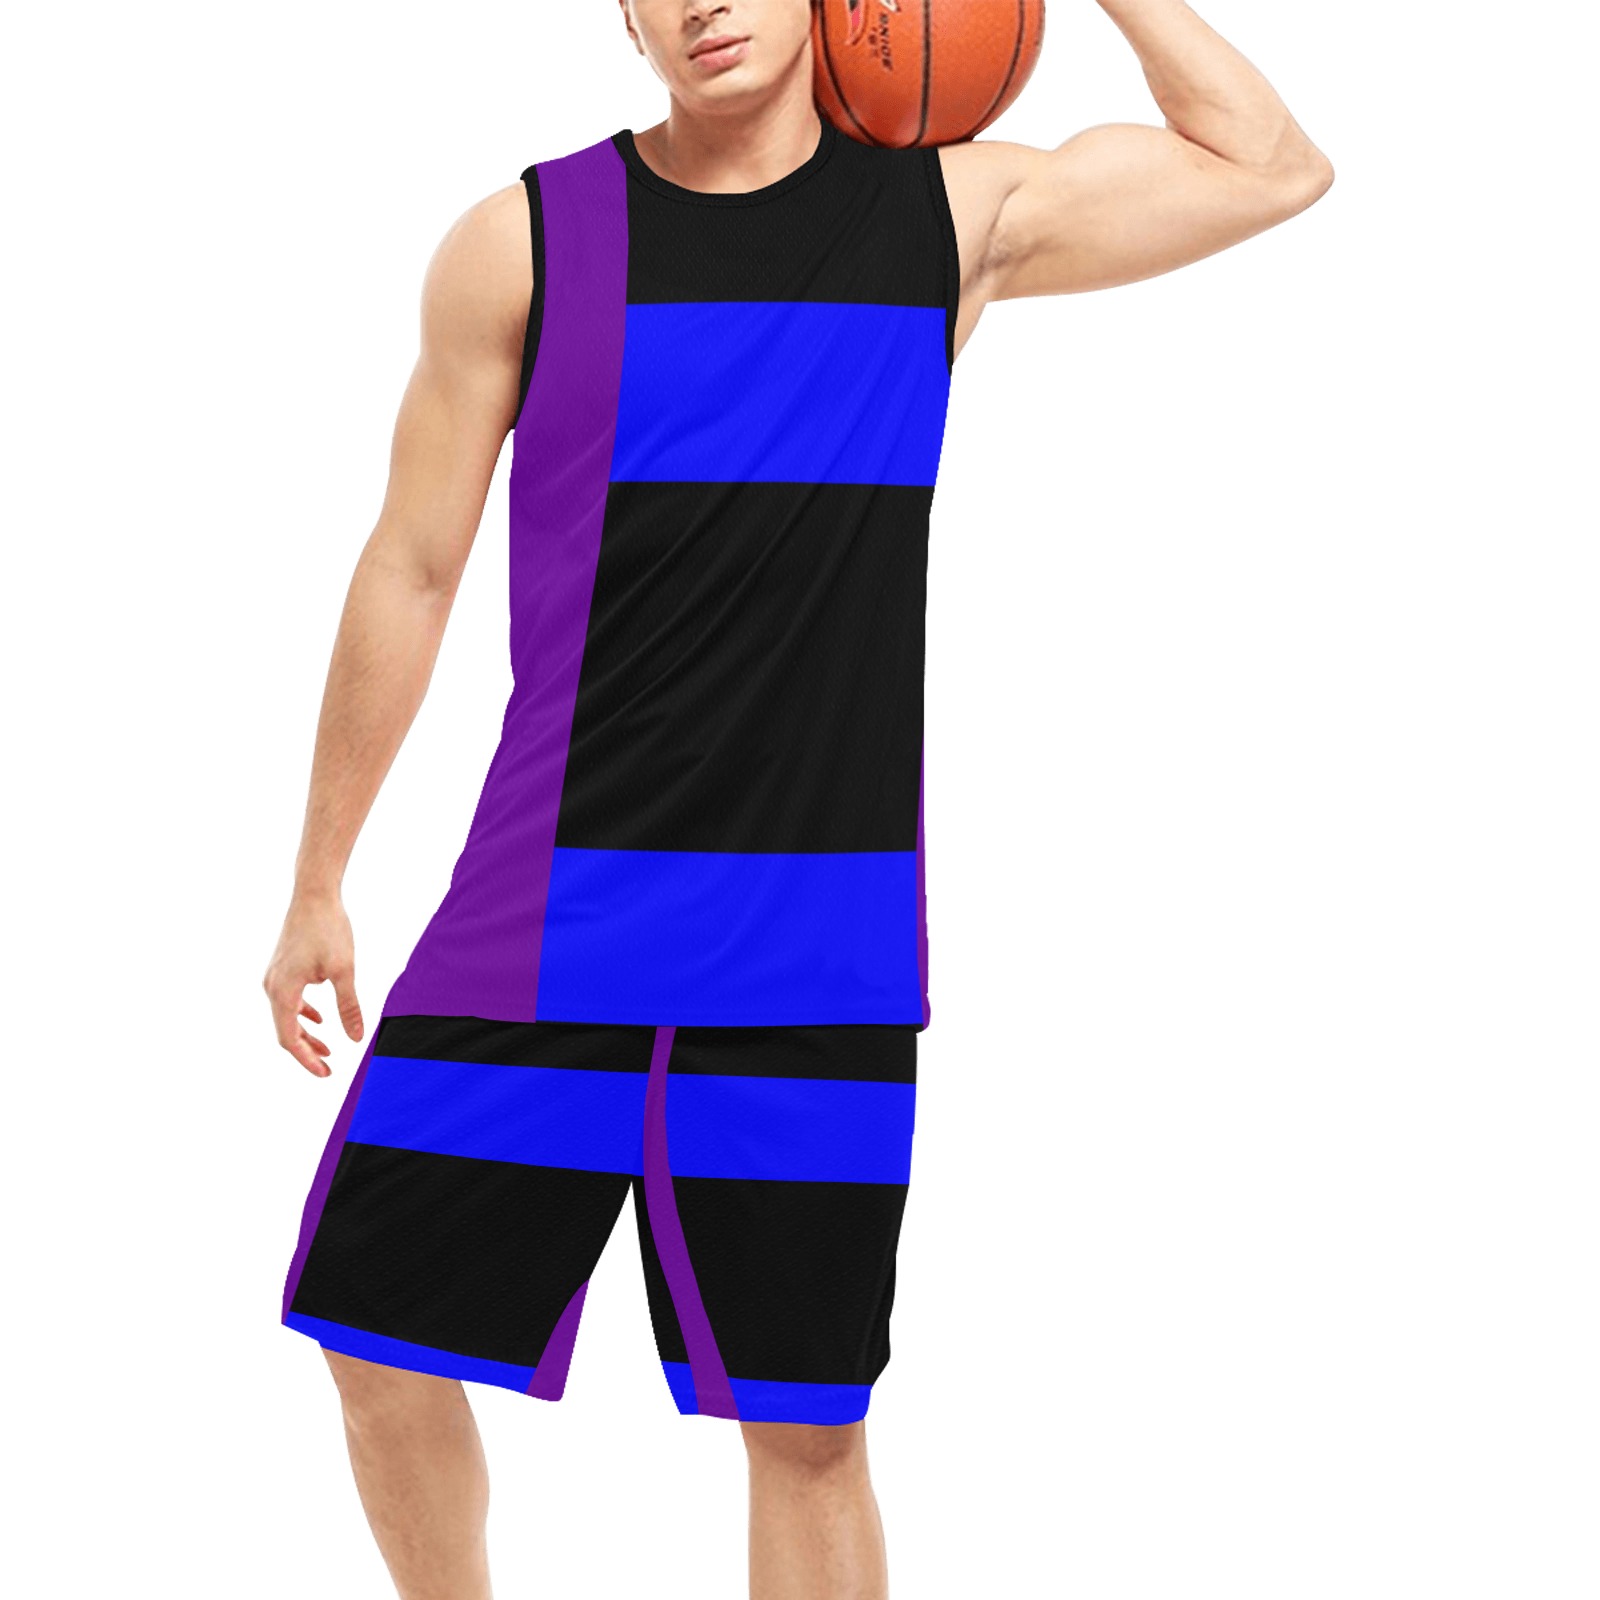 imgonline-com-ua-tile-WQMwAyaNwoBH Basketball Uniform with Pocket